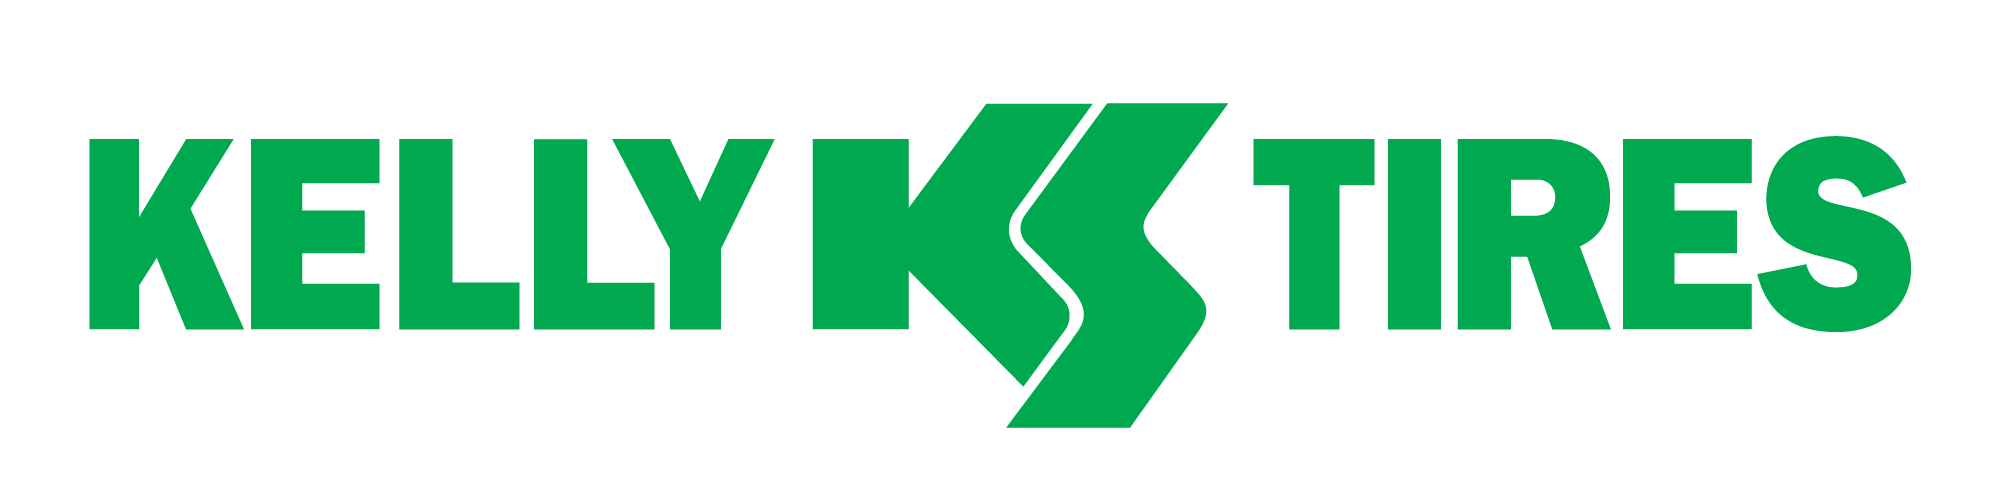 kelly-springfield-logo-2500x500.png